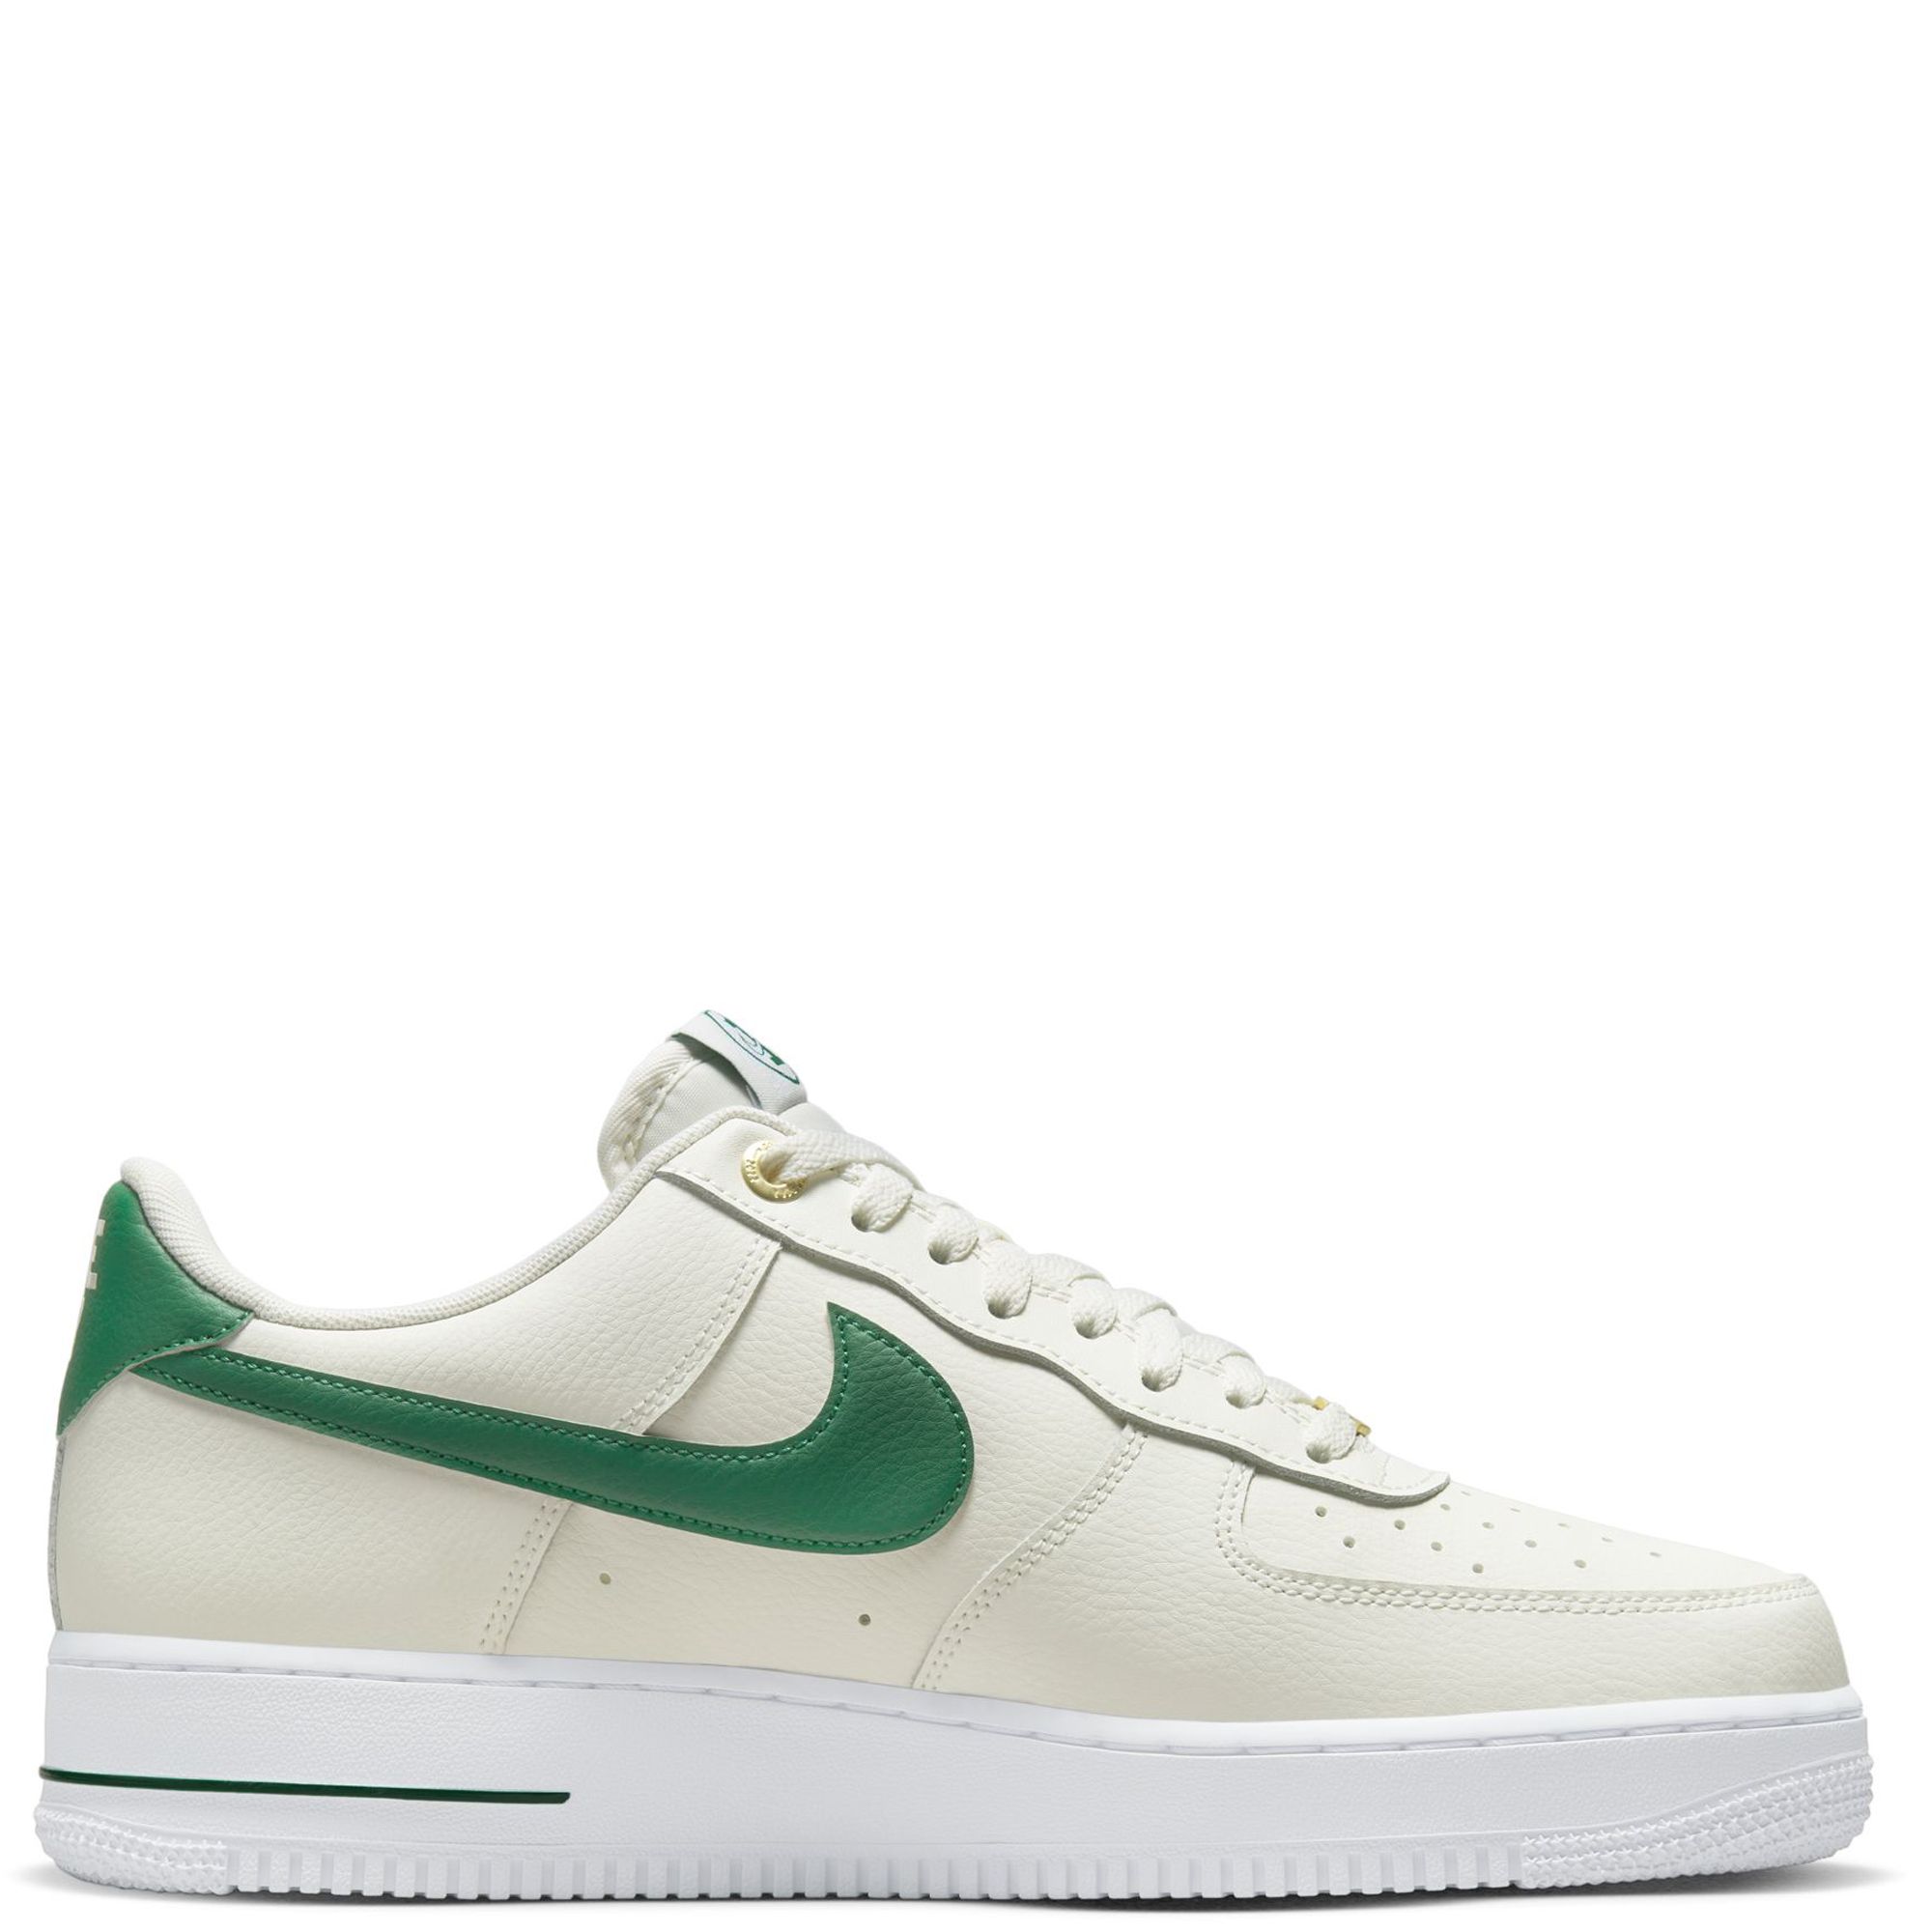 Nike Air Force 1 Malachite Womens Lifestyle Shoes Green White